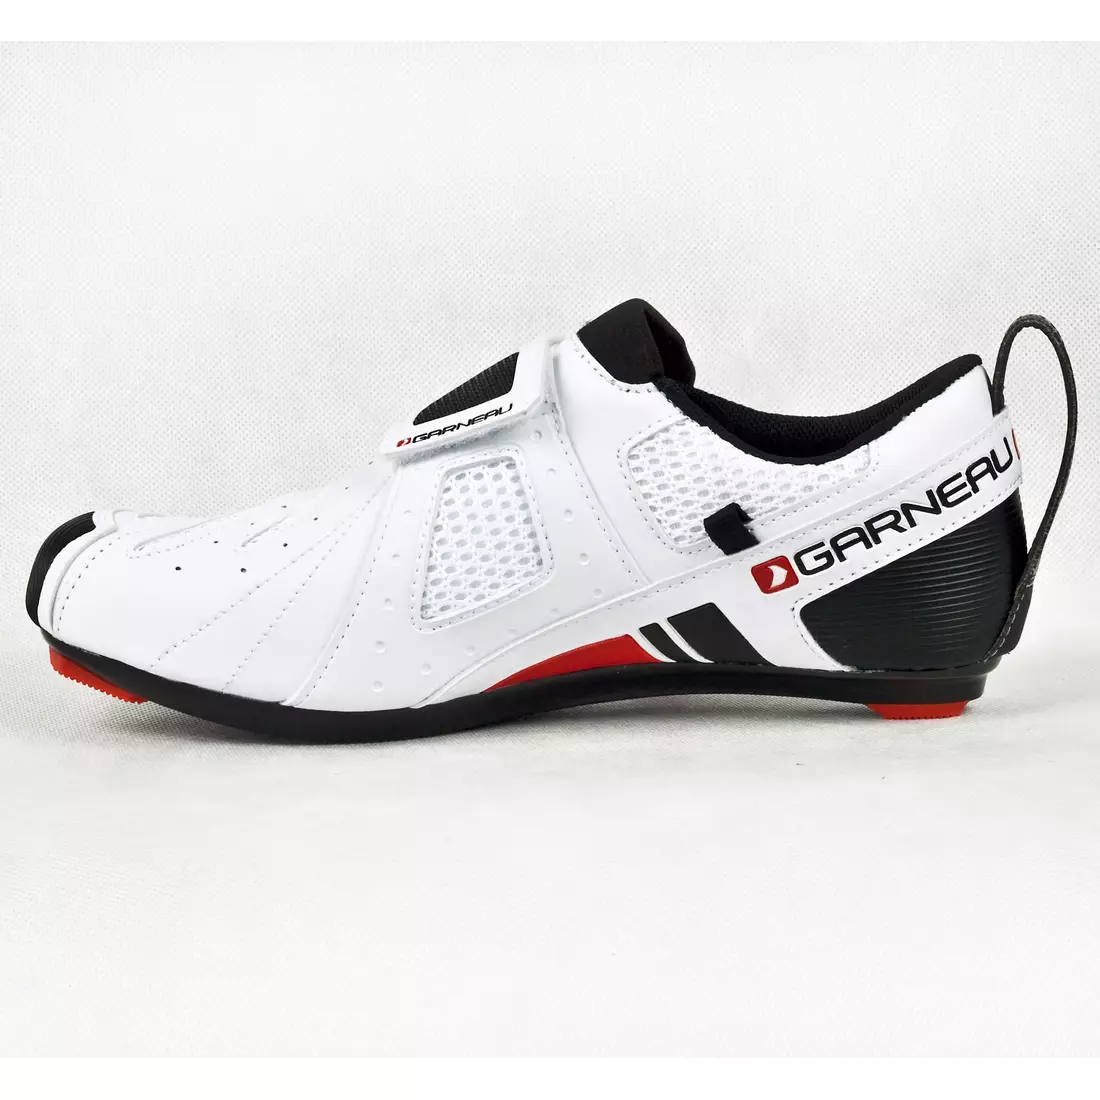 Louis Garneu - cycling shoes - triathlon TRI-X SPEED, color: white